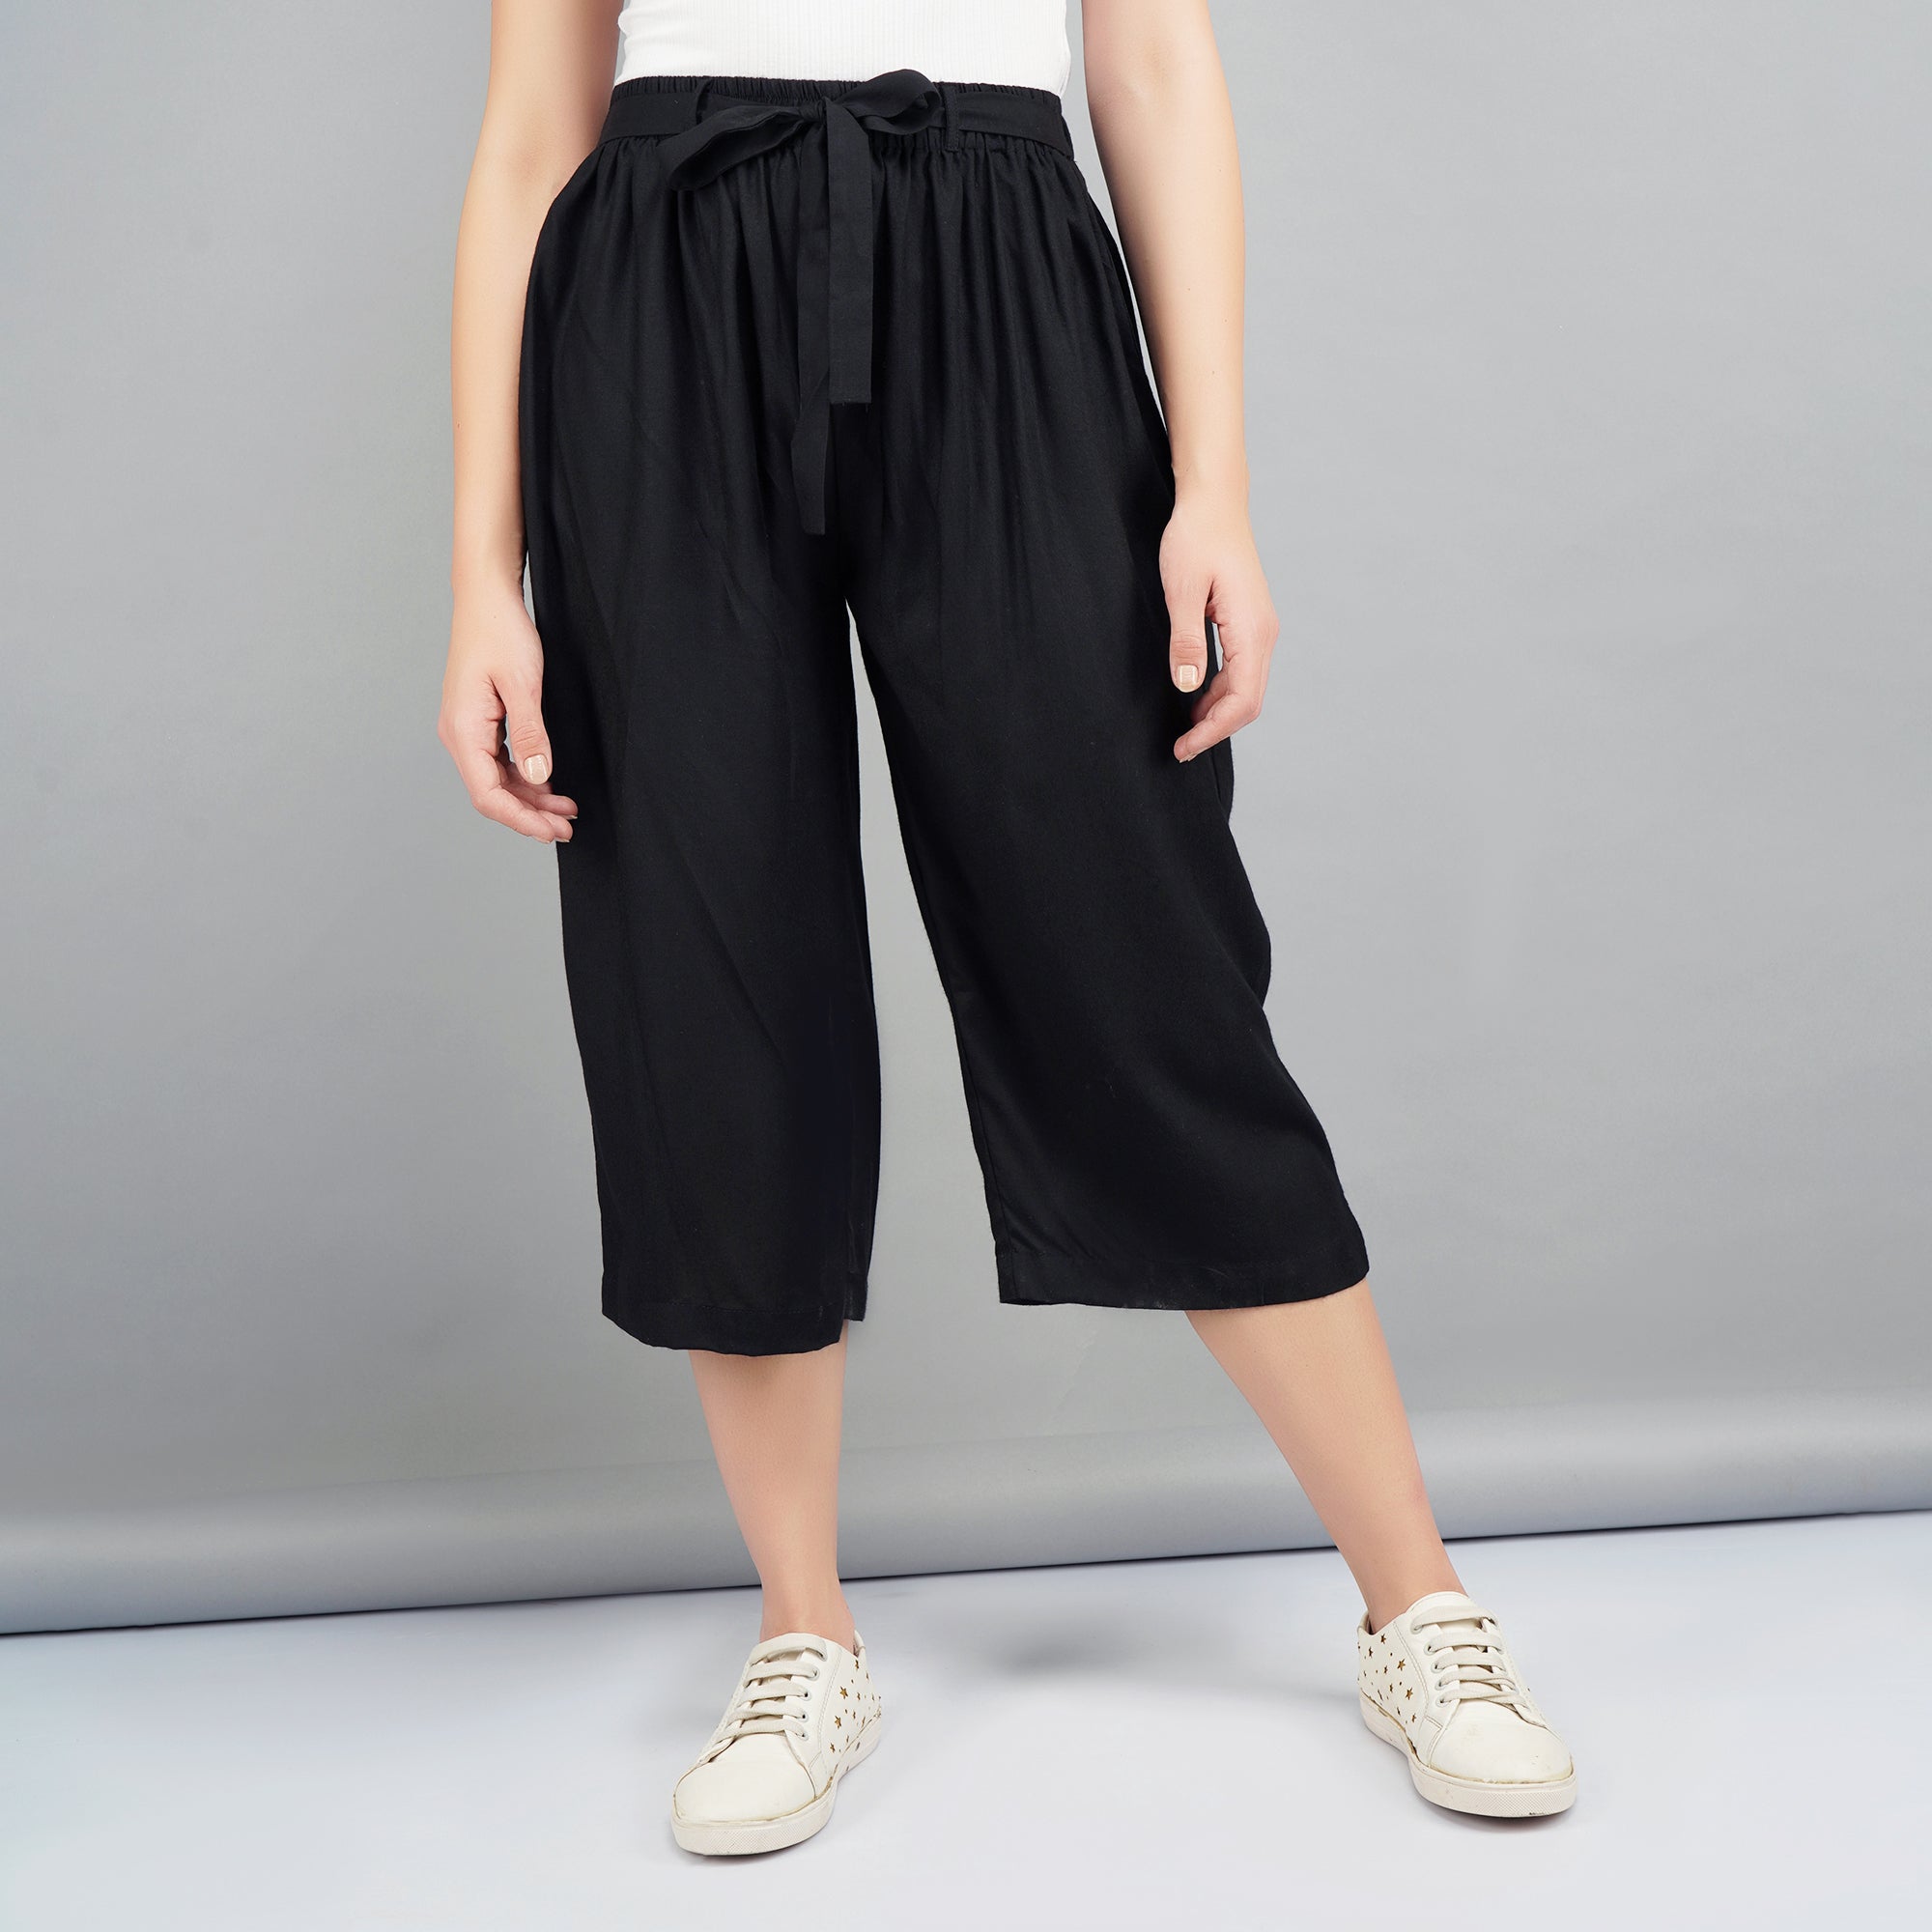 Buy Black Trousers & Pants for Women by GLOBUS Online | Ajio.com